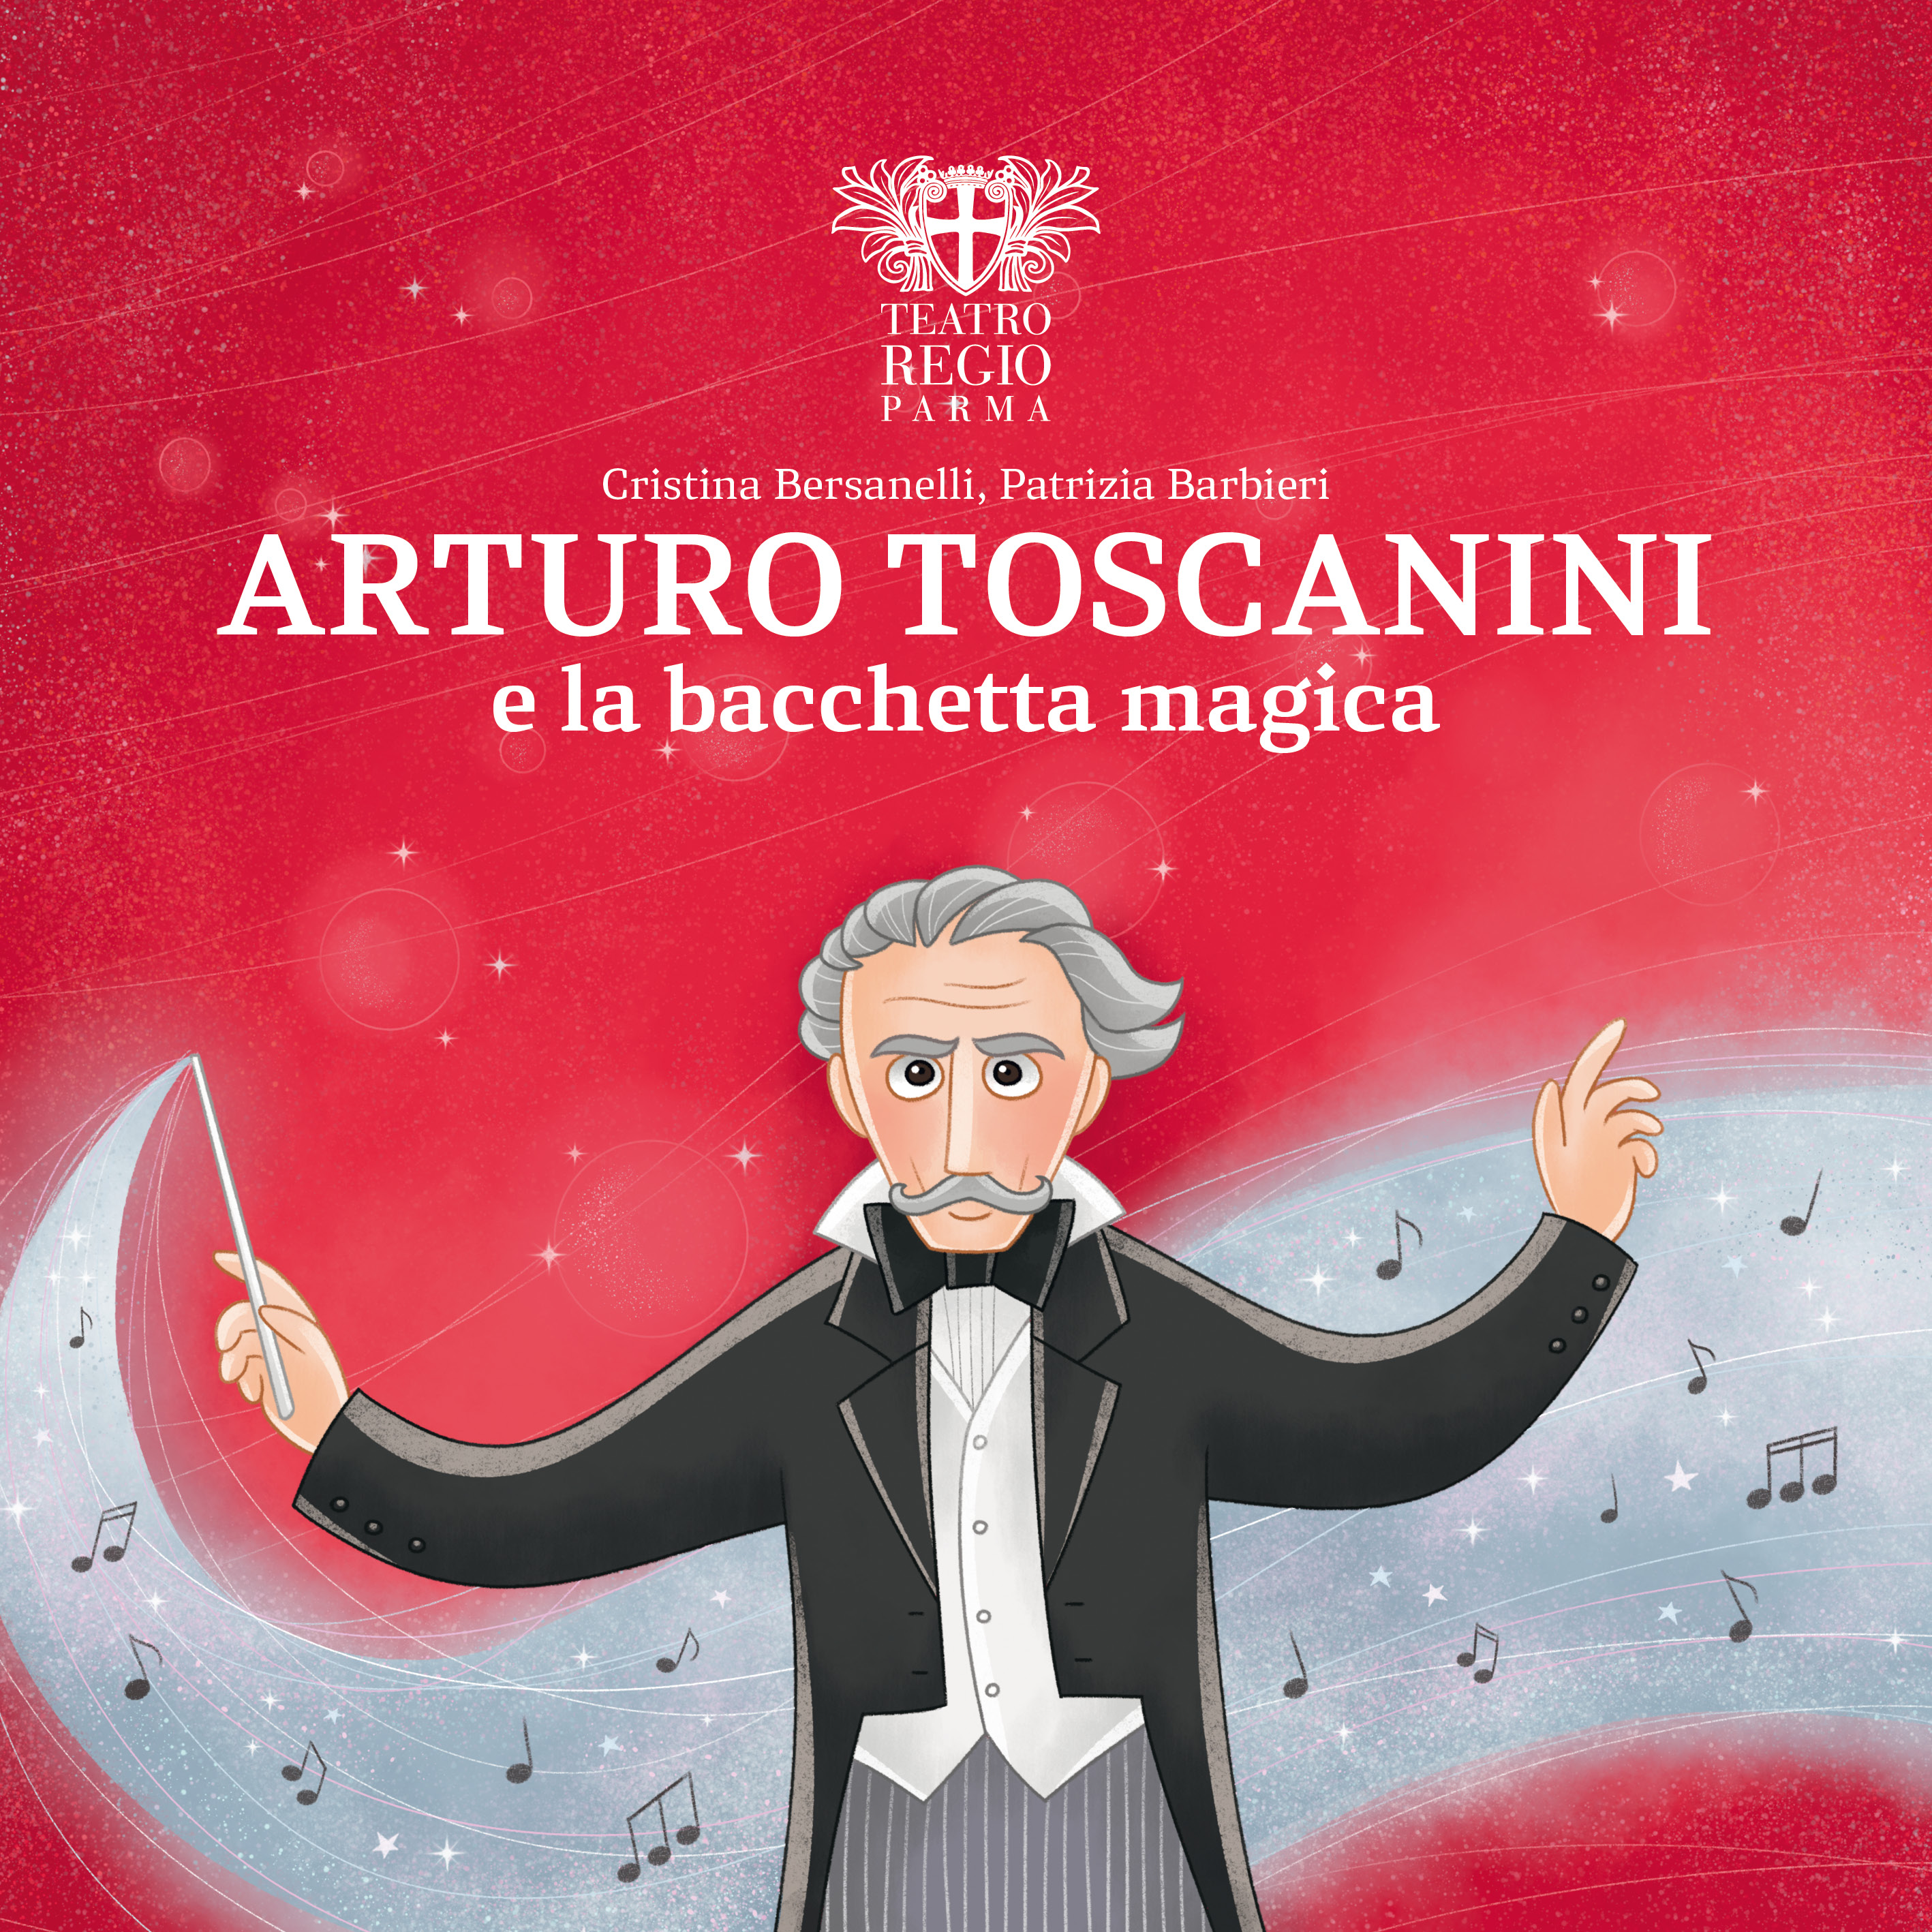 ARTURO TOSCANINI  and the magic wand